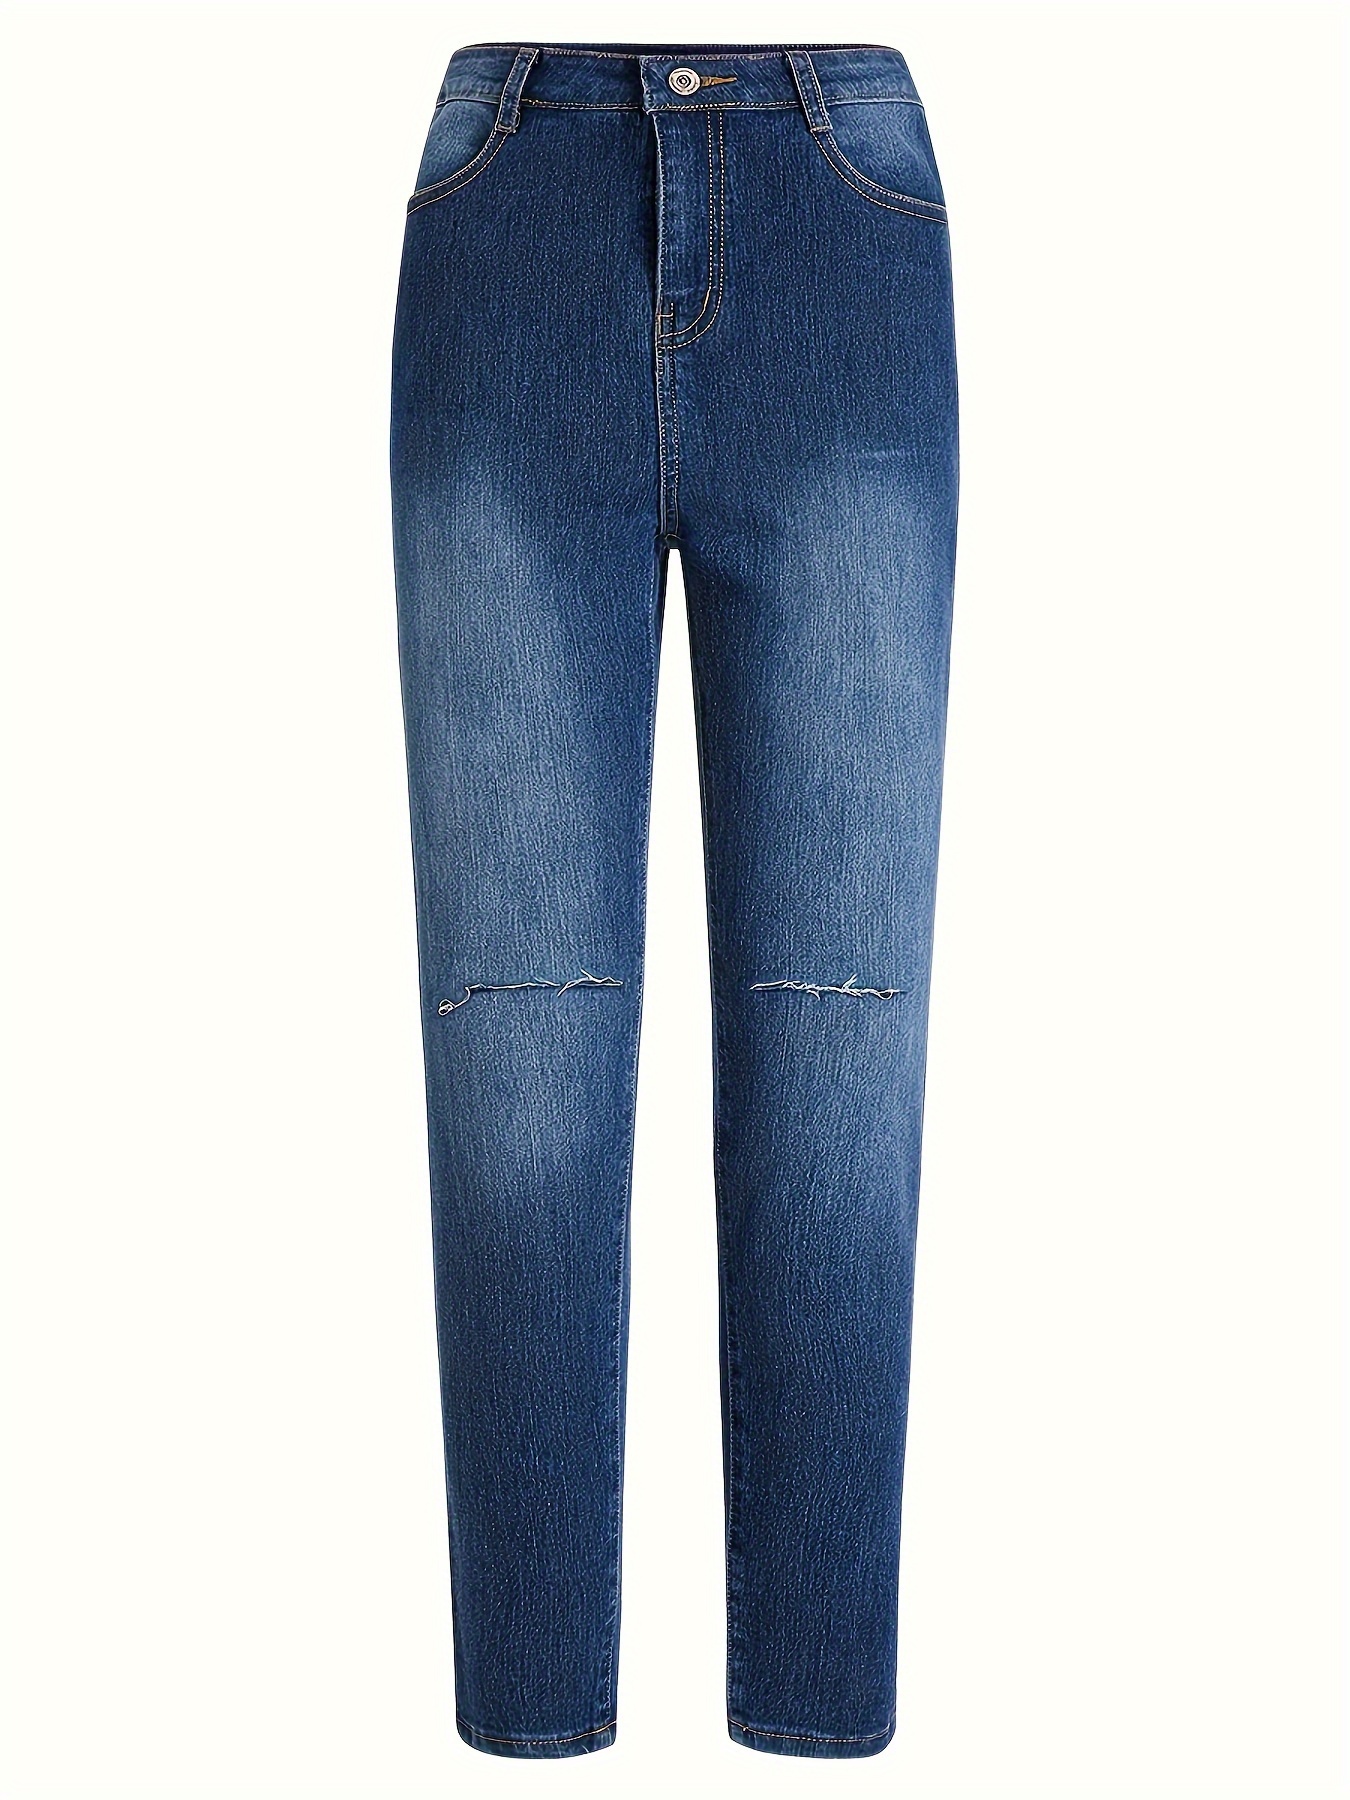 Blue Slim Fit Skinny Jeans, Slant Pockets High-Stretch Versatile Tight  Jeans, Women's Denim Jeans & Clothing